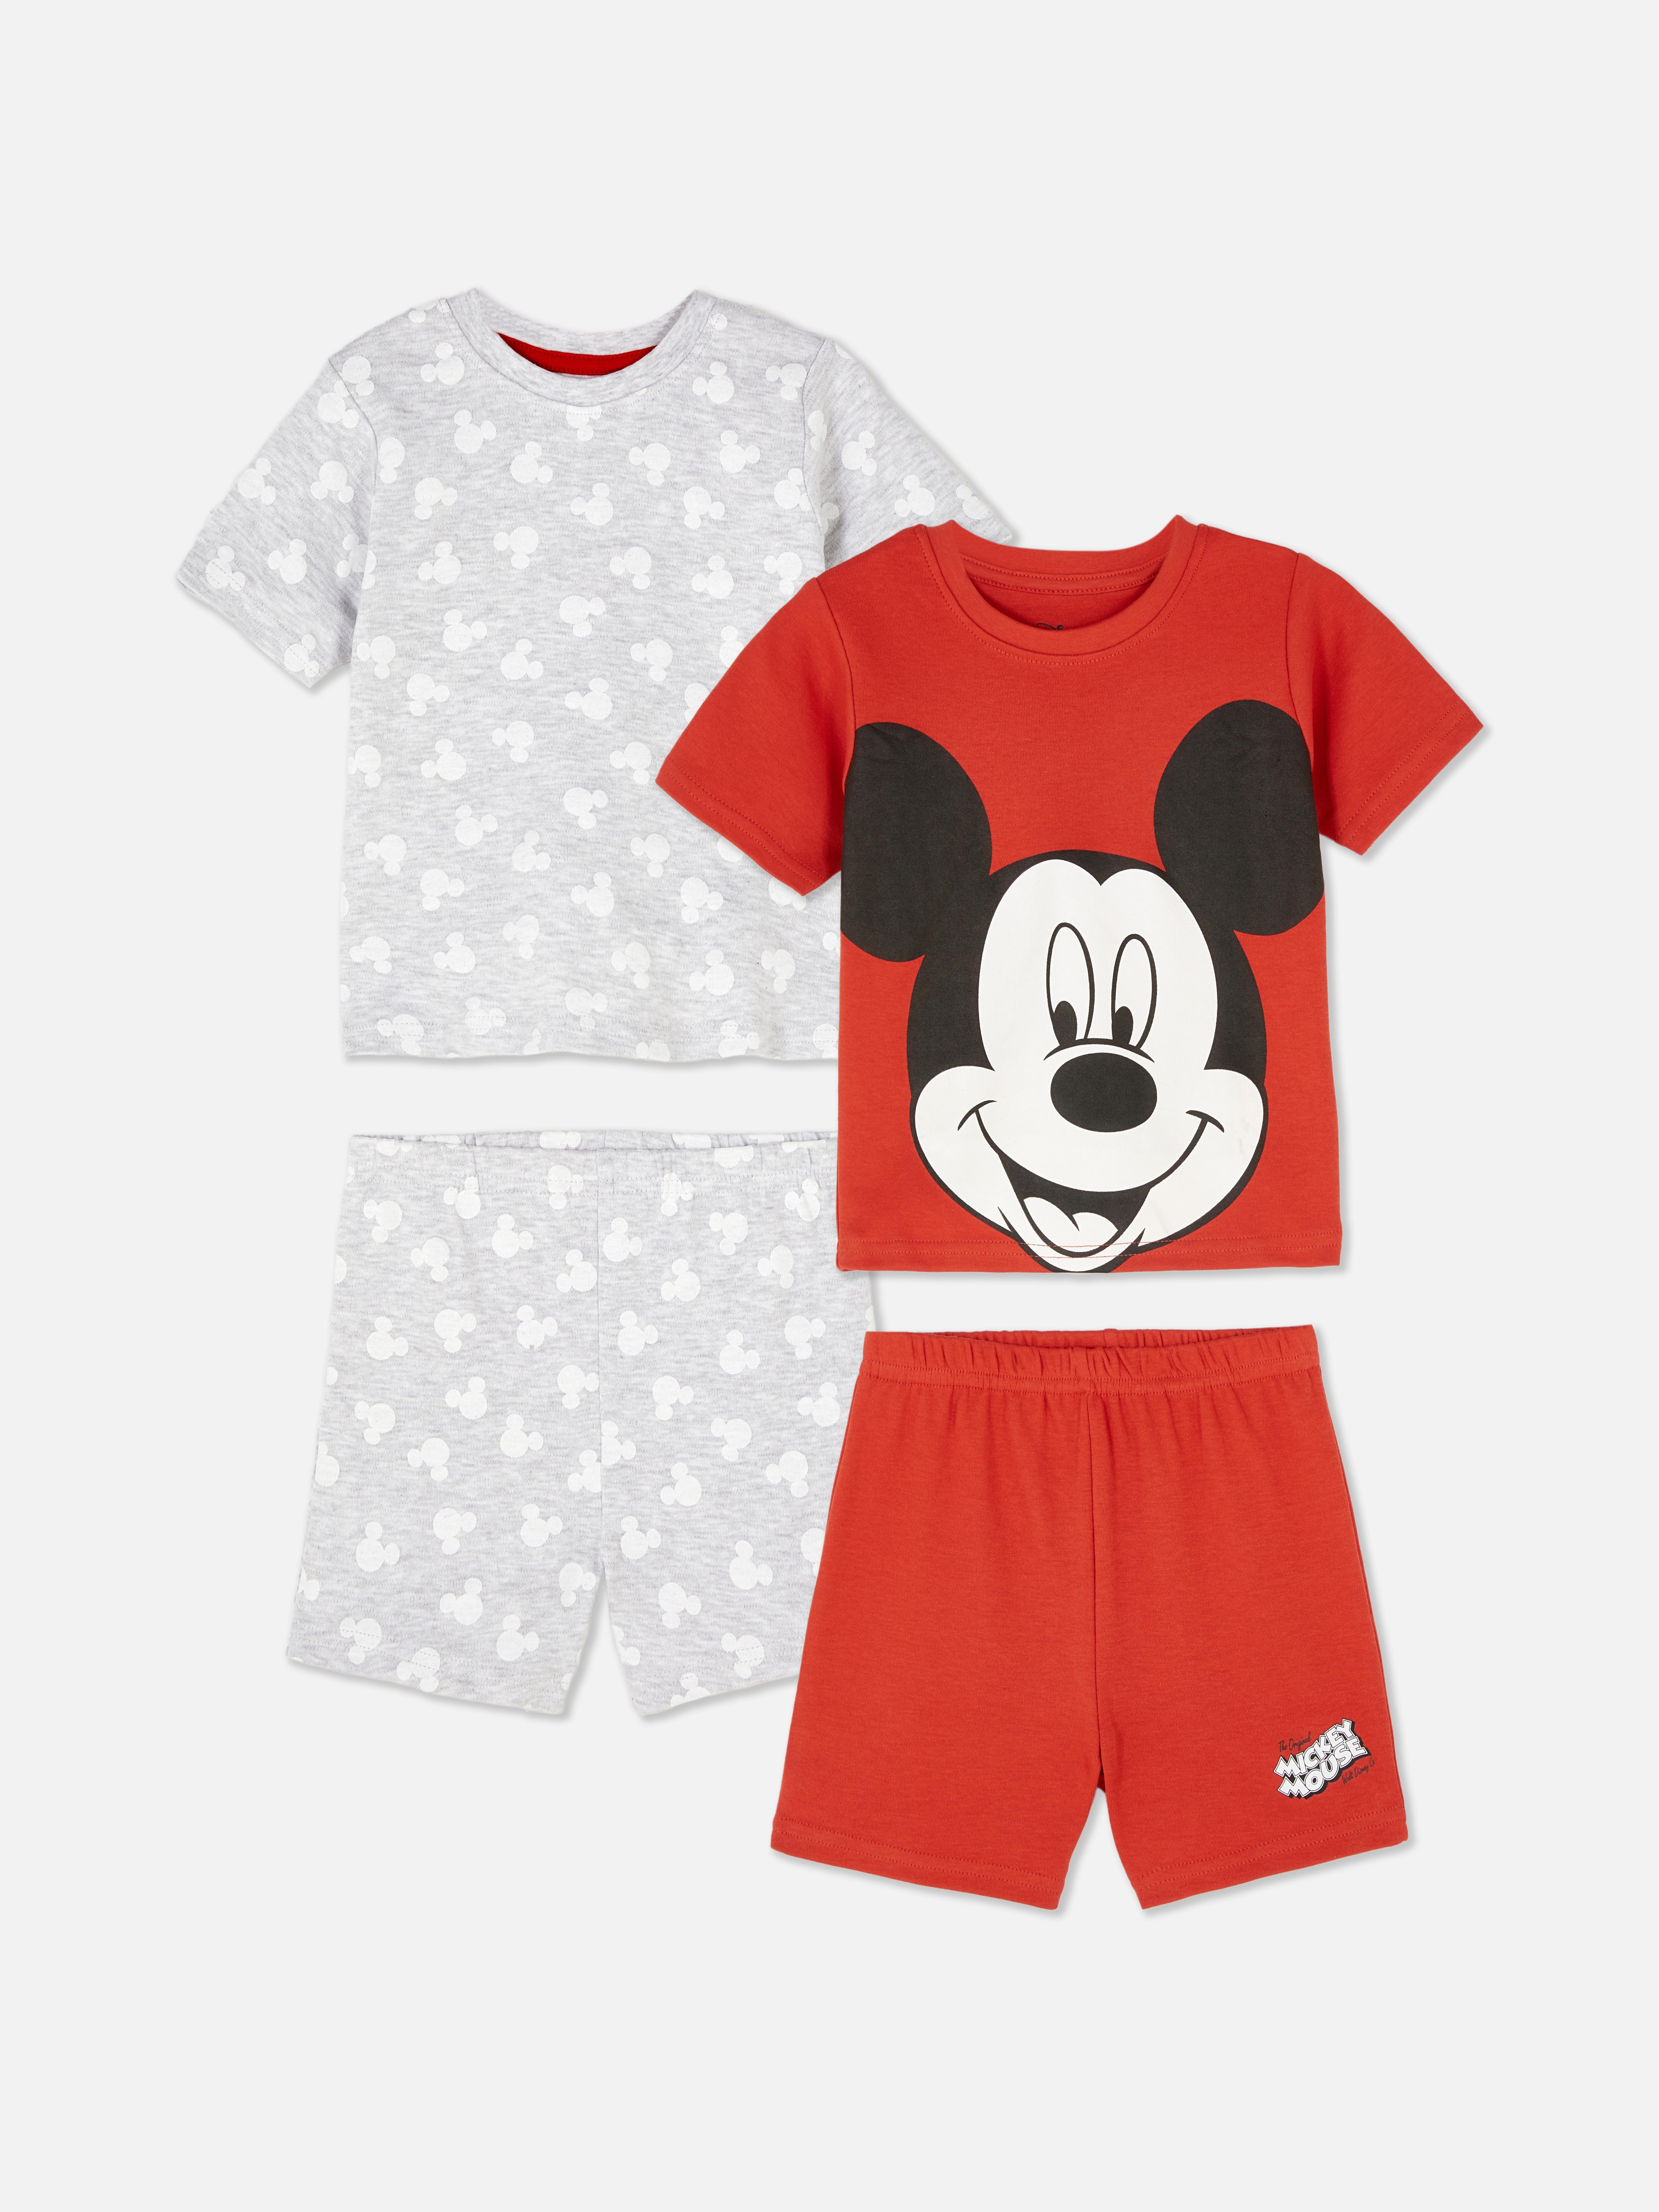 „Disneys Micky Maus“ Schlafanzug, 2er-Pack